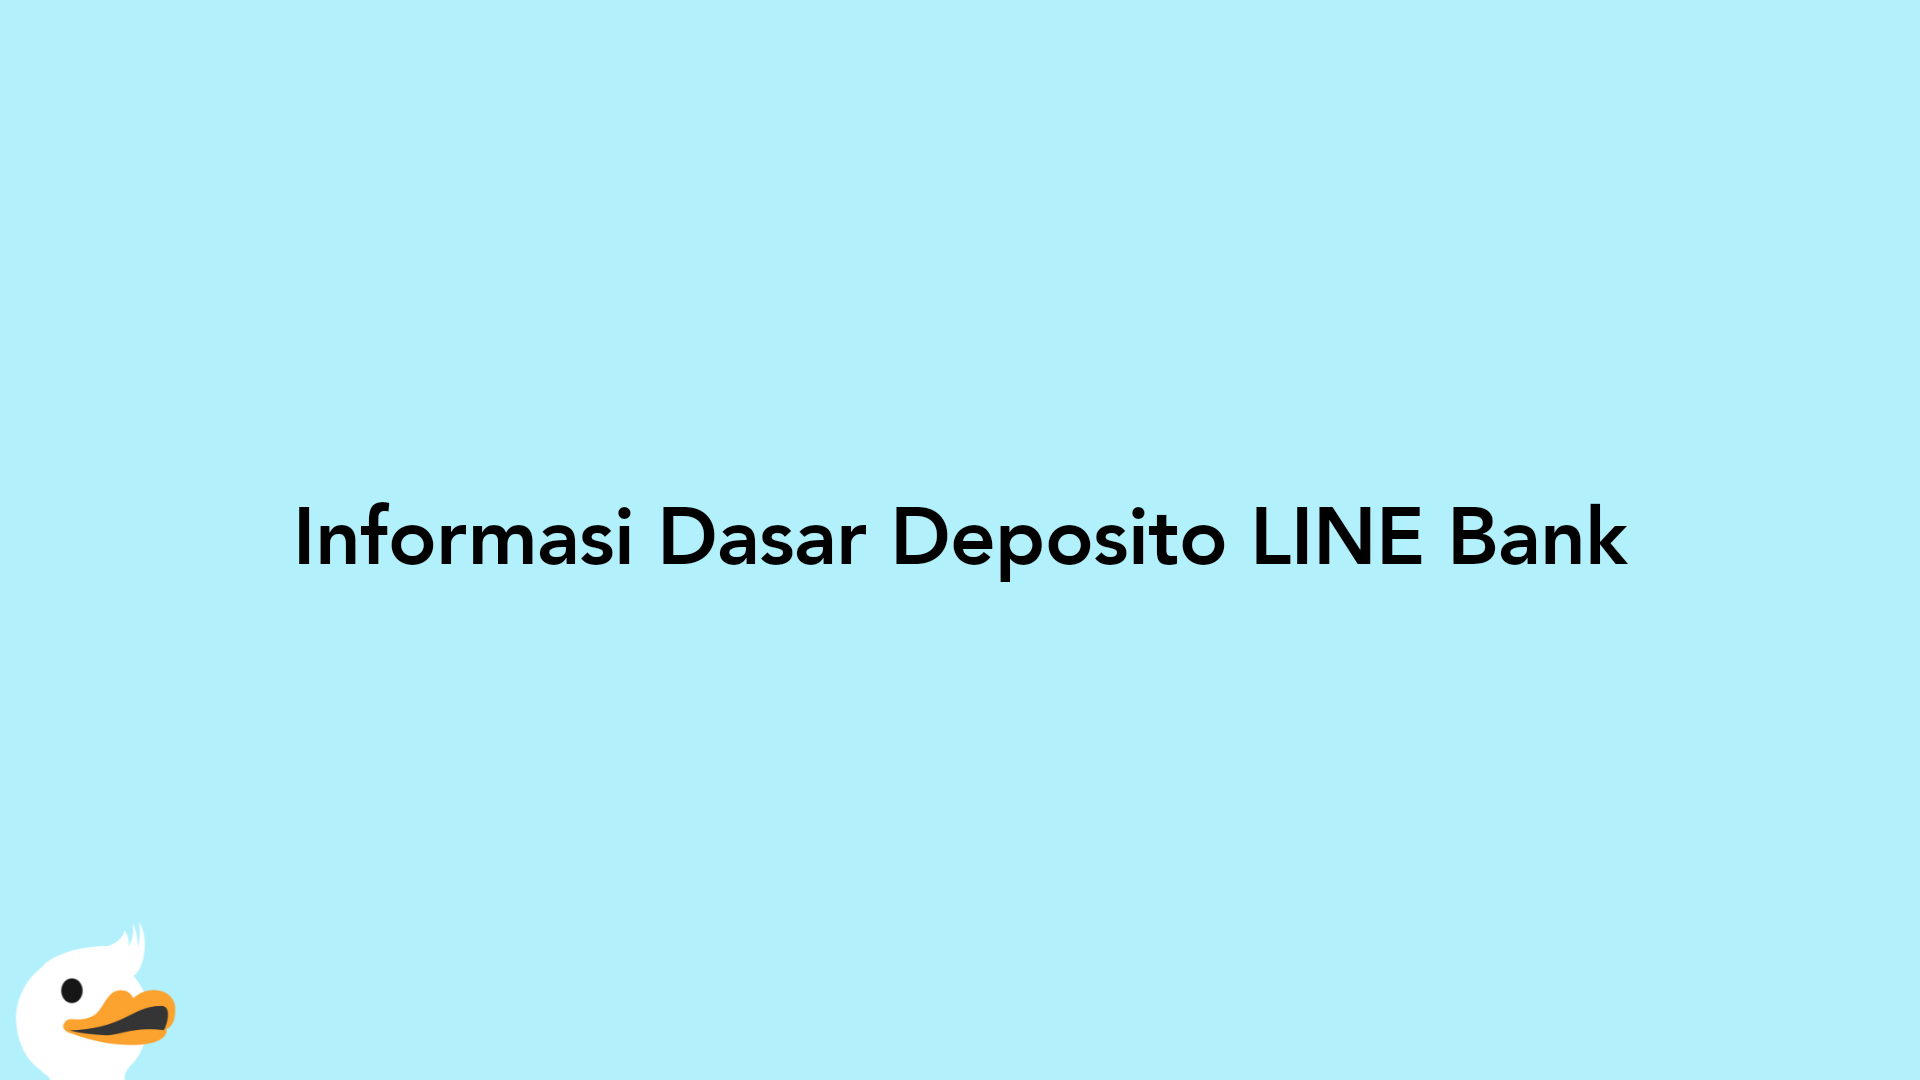 Informasi Dasar Deposito LINE Bank